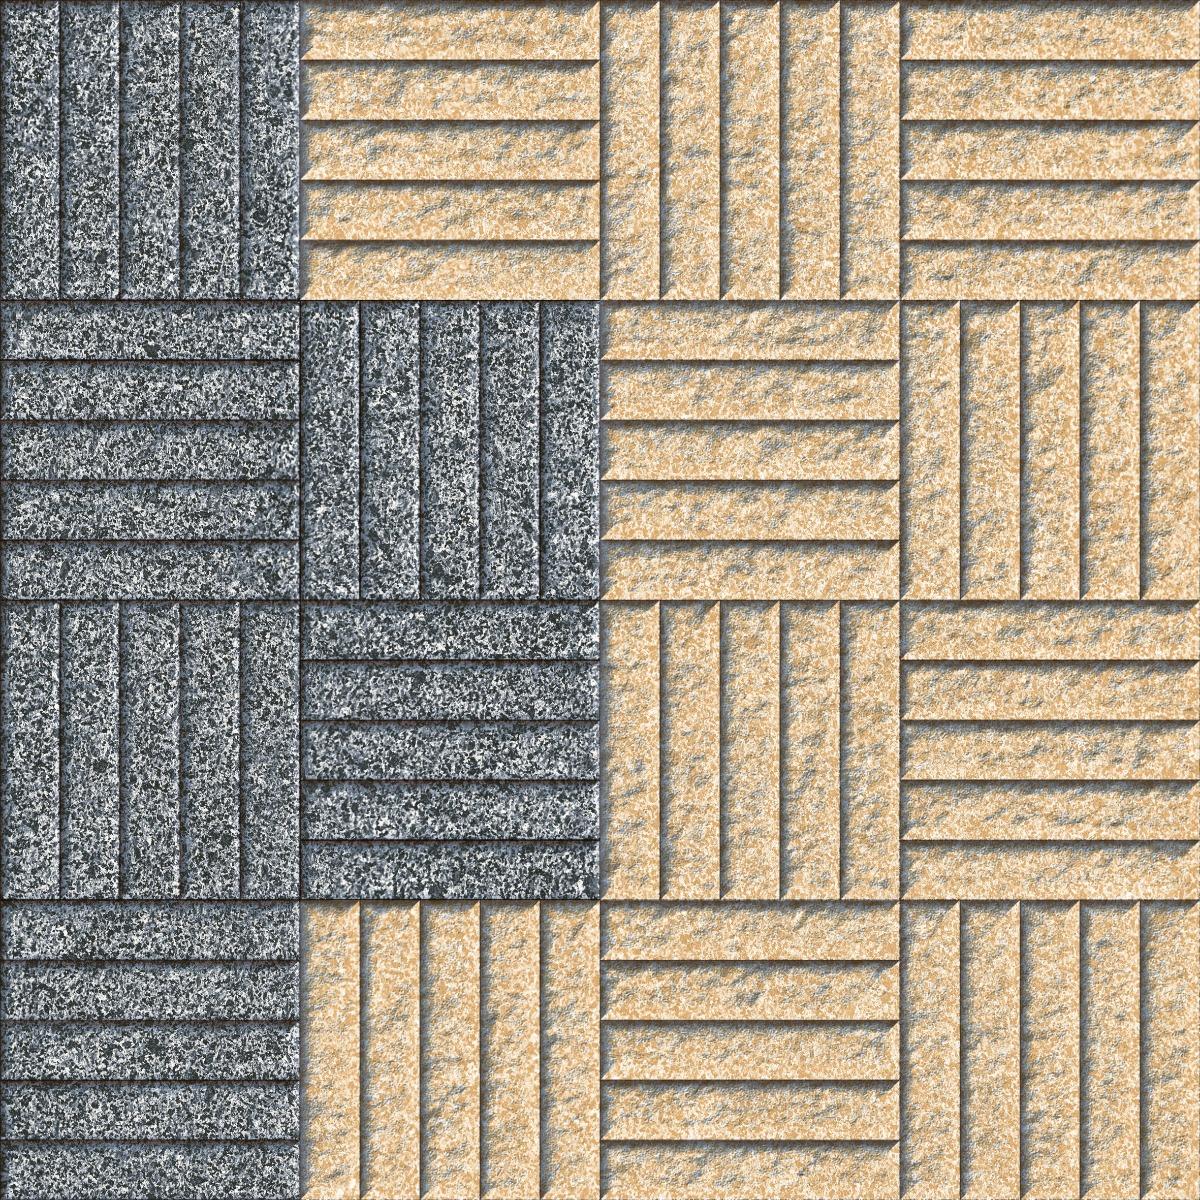 Parking Tiles for Commercial Tiles, Parking Tiles, Office Tiles, Pathway Tiles, Hospital Tiles, High Traffic Tiles, Bar/Restaurant, Outdoor Area, Porch/Parking